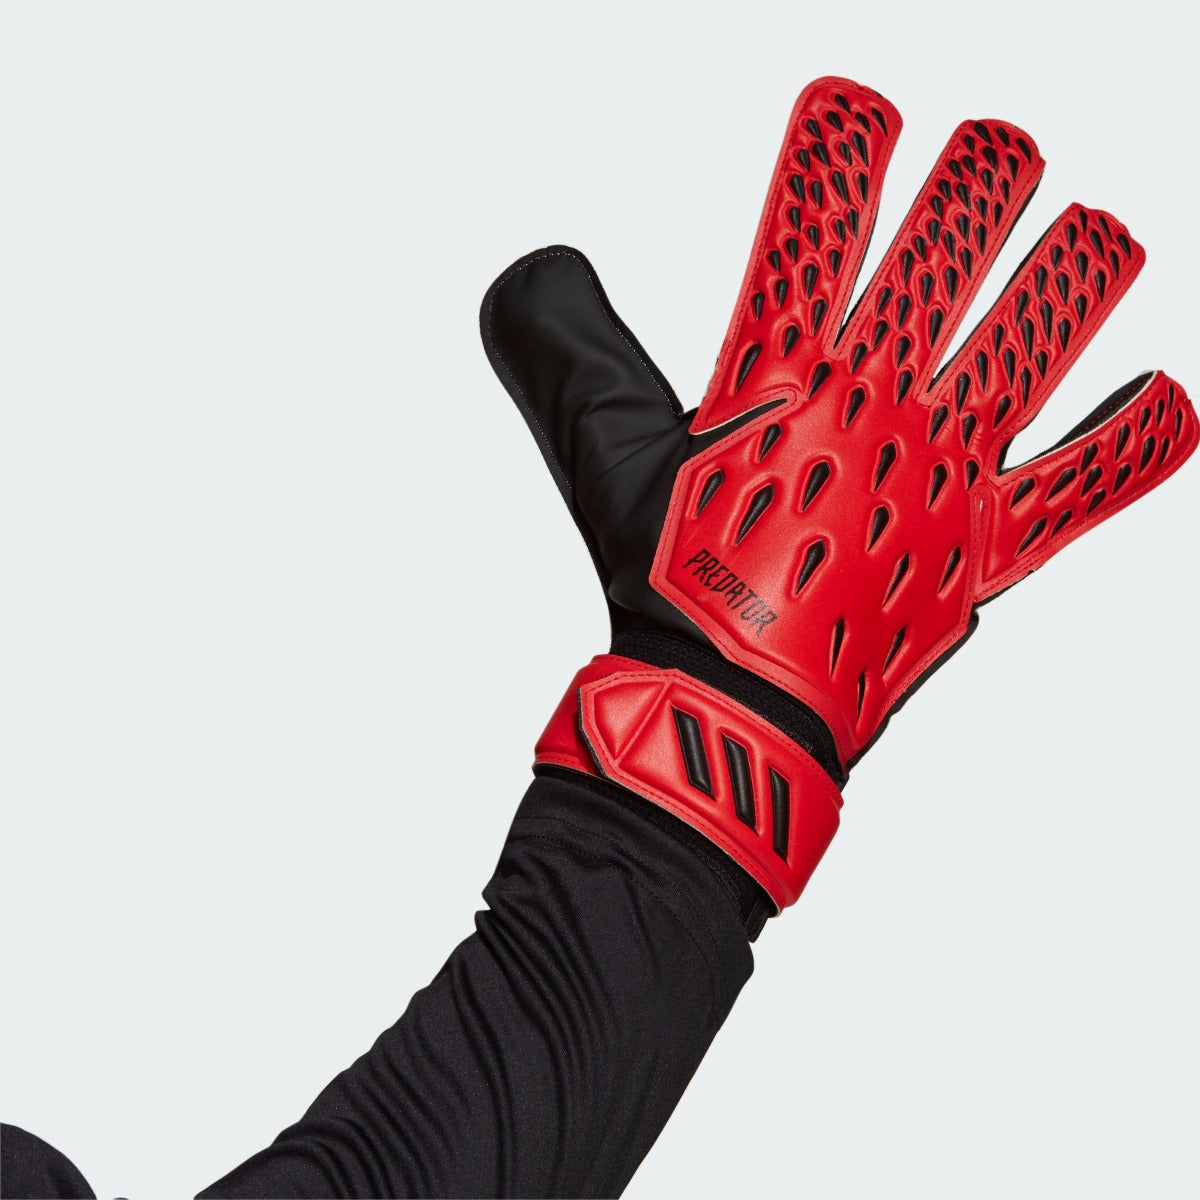 Adidas Predator Training Goalkeeper Gloves - Red-Black (Single - Outer)